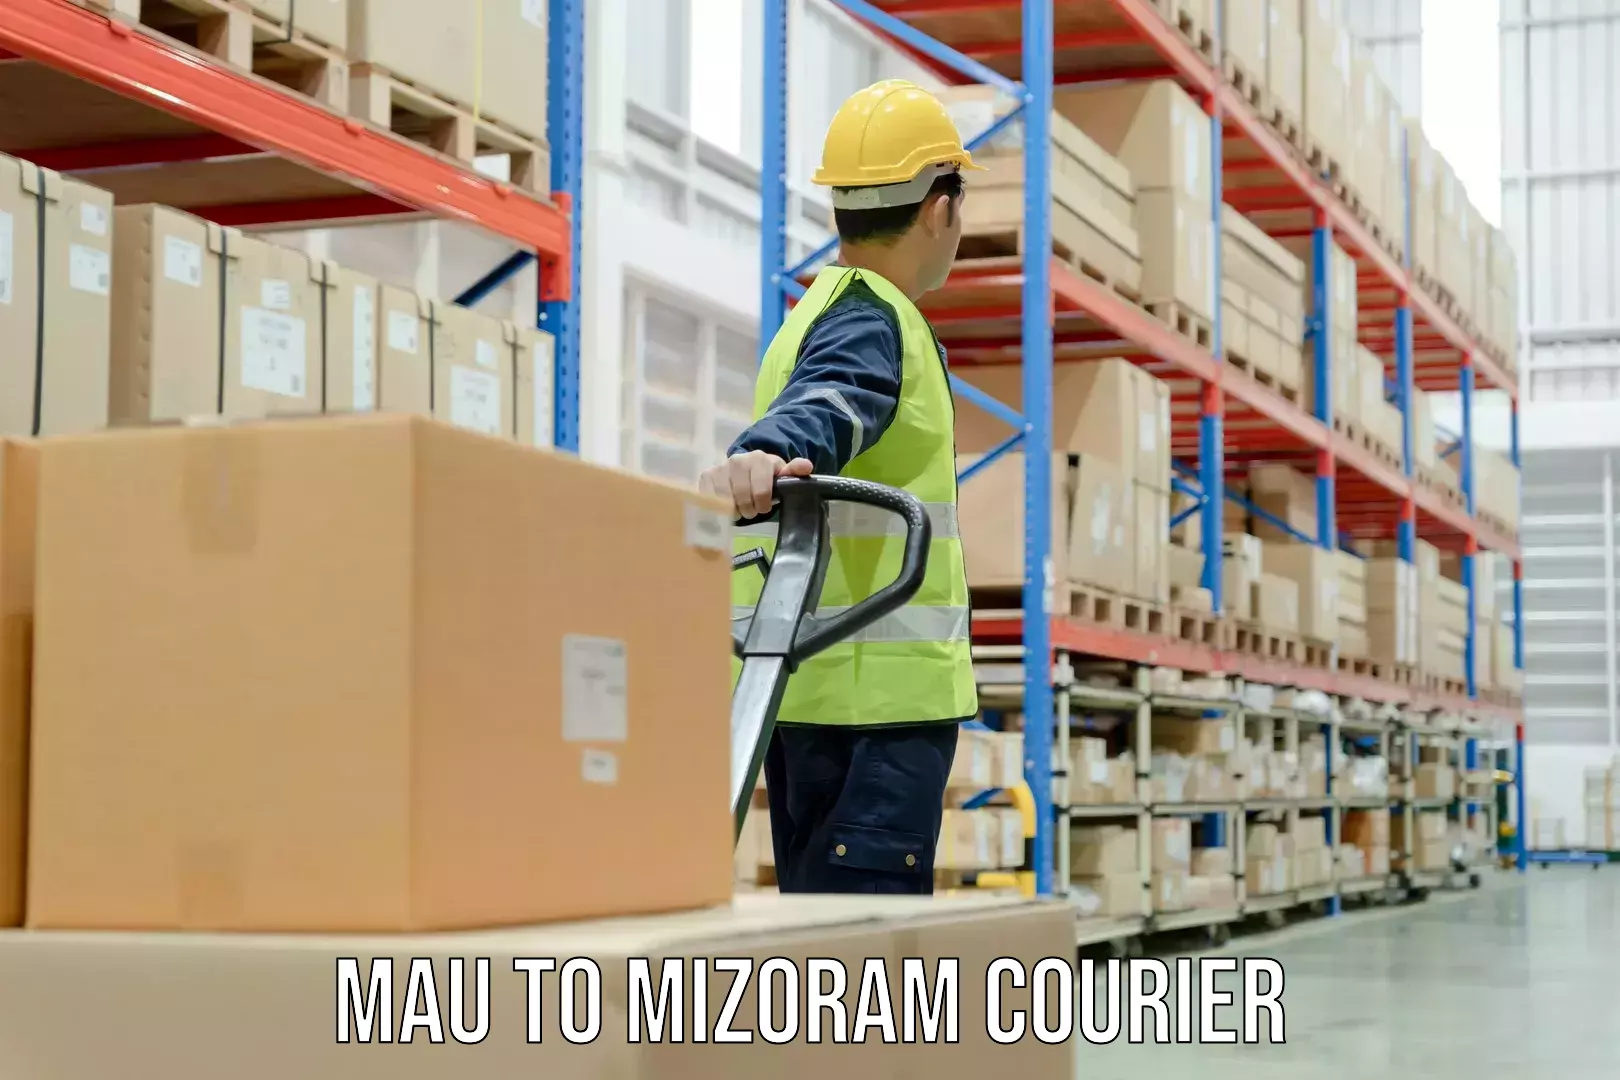 User-friendly delivery service Mau to Mizoram